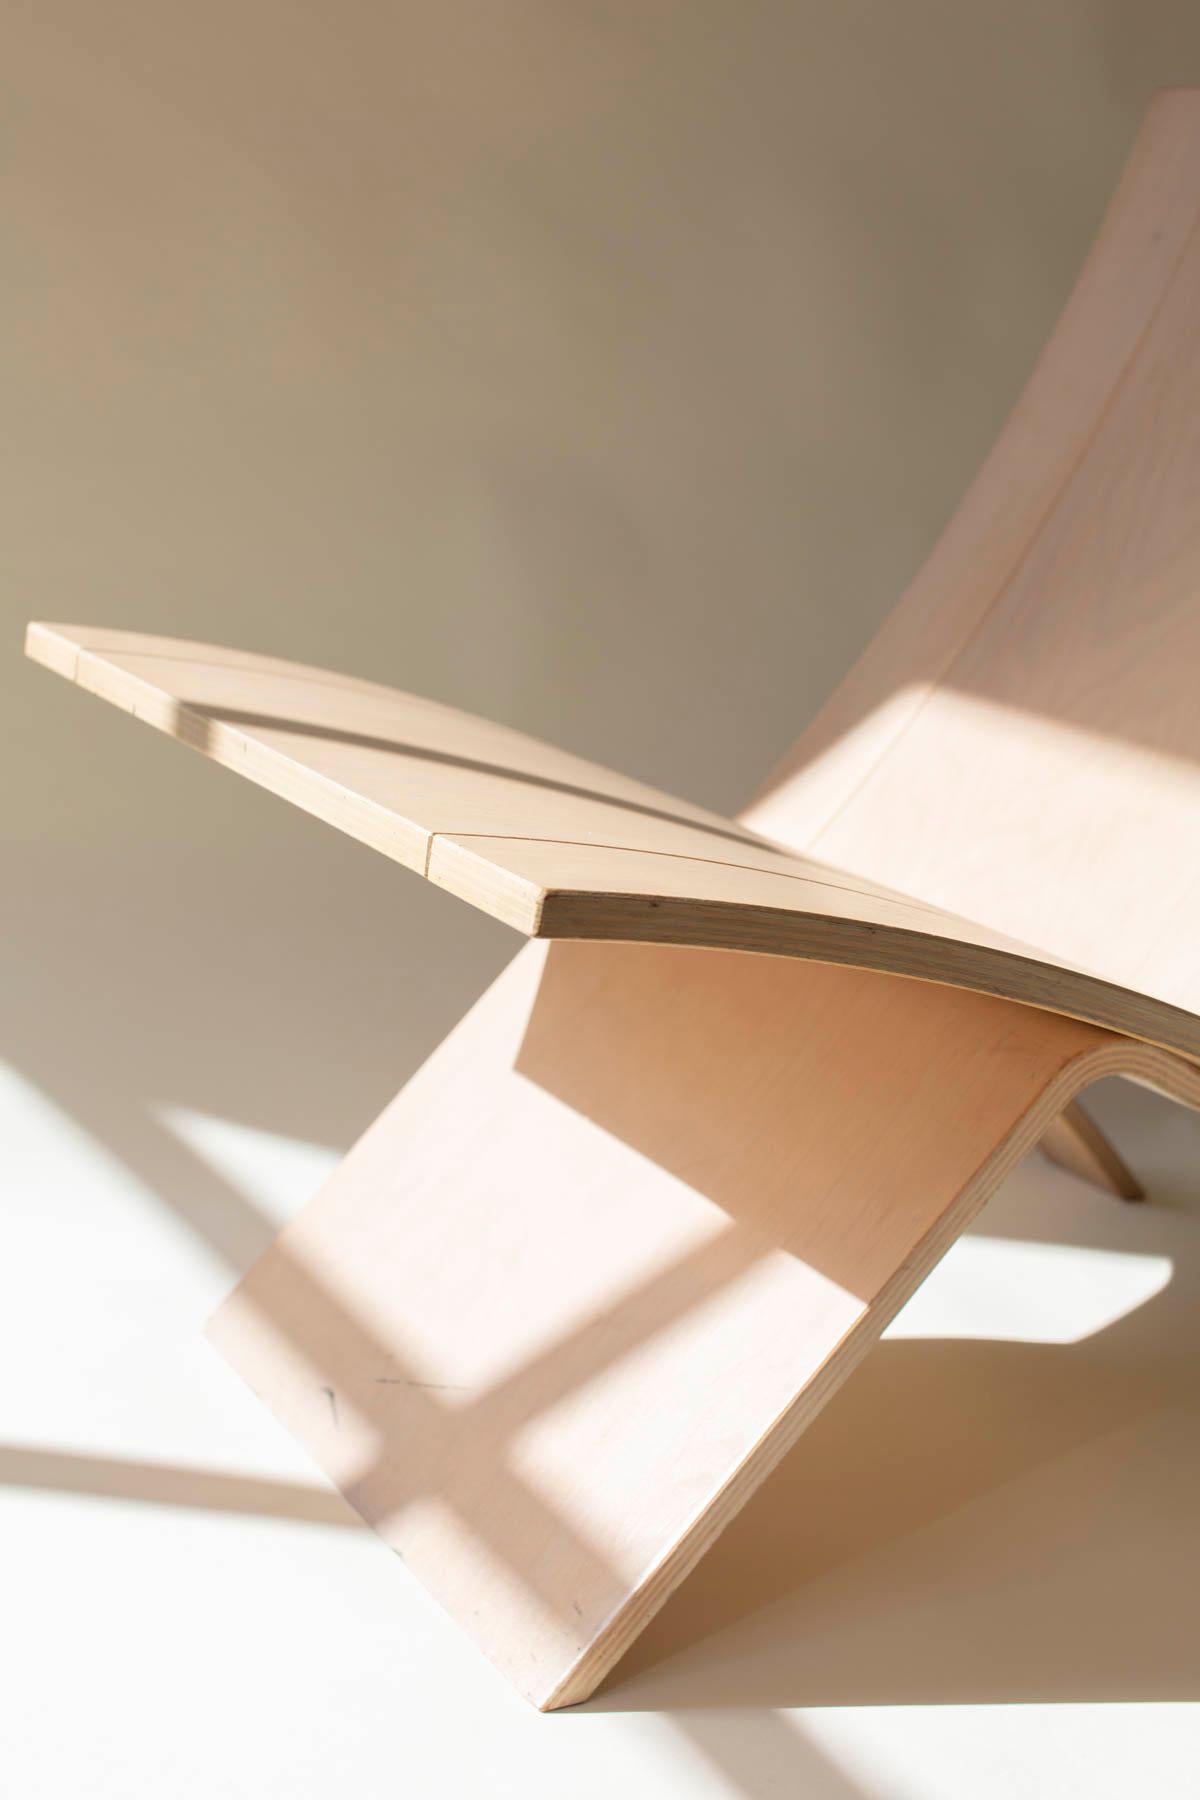 Beechwood 'Laminex' Folding Chair by Jens Nielsen 80s for Falster For Sale 8